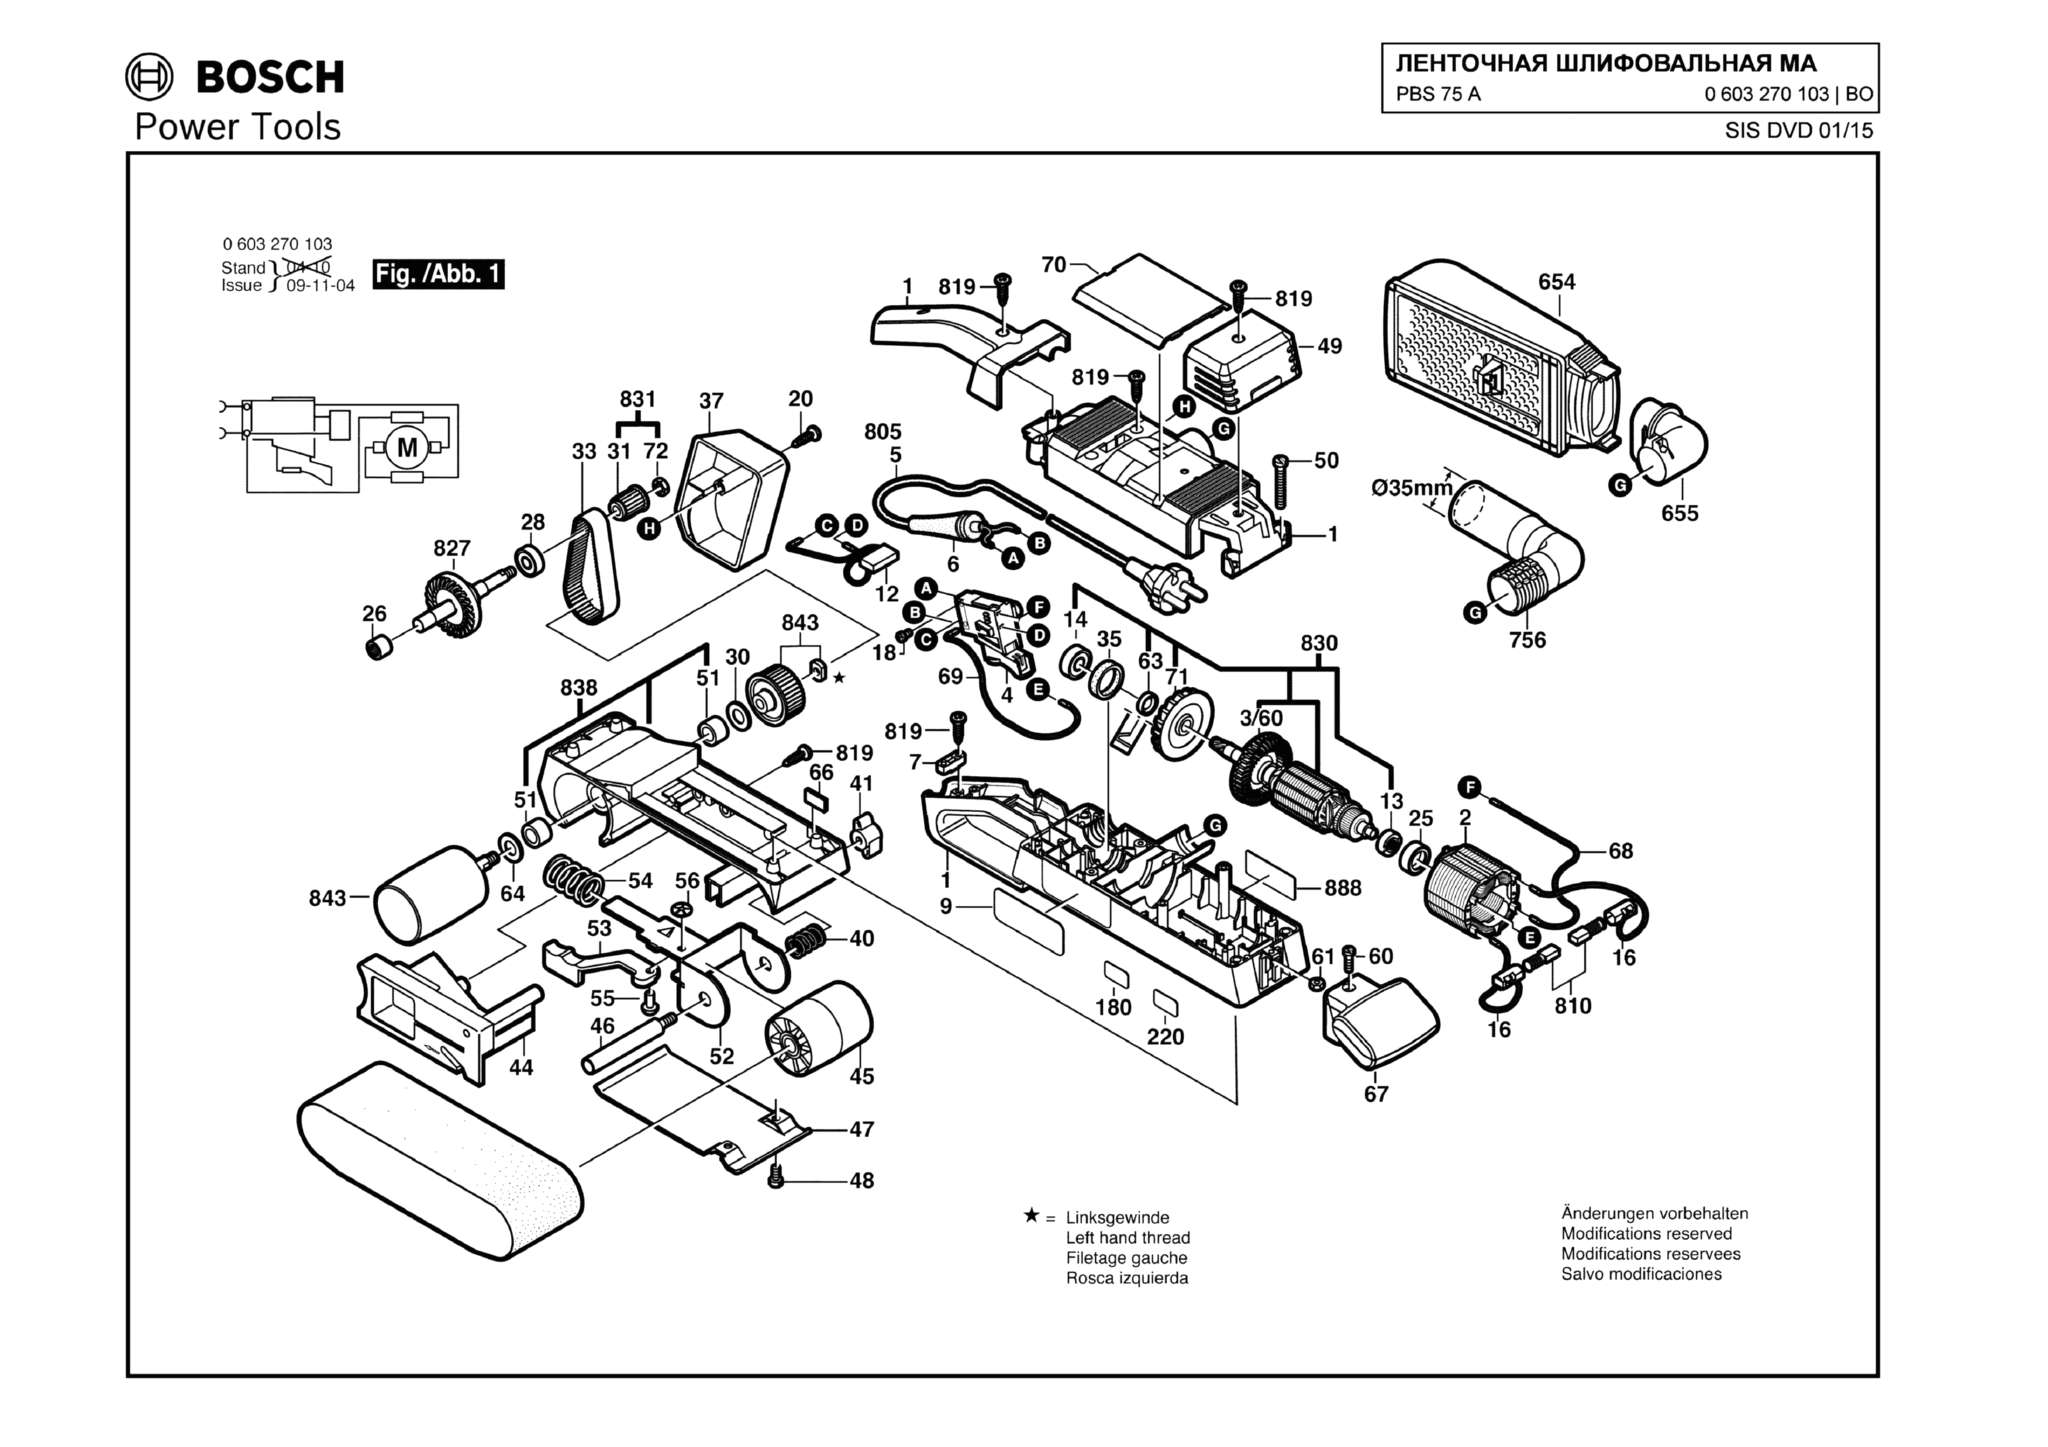 Запчасти, схема и деталировка Bosch PBS 75 A (ТИП 0603270103)